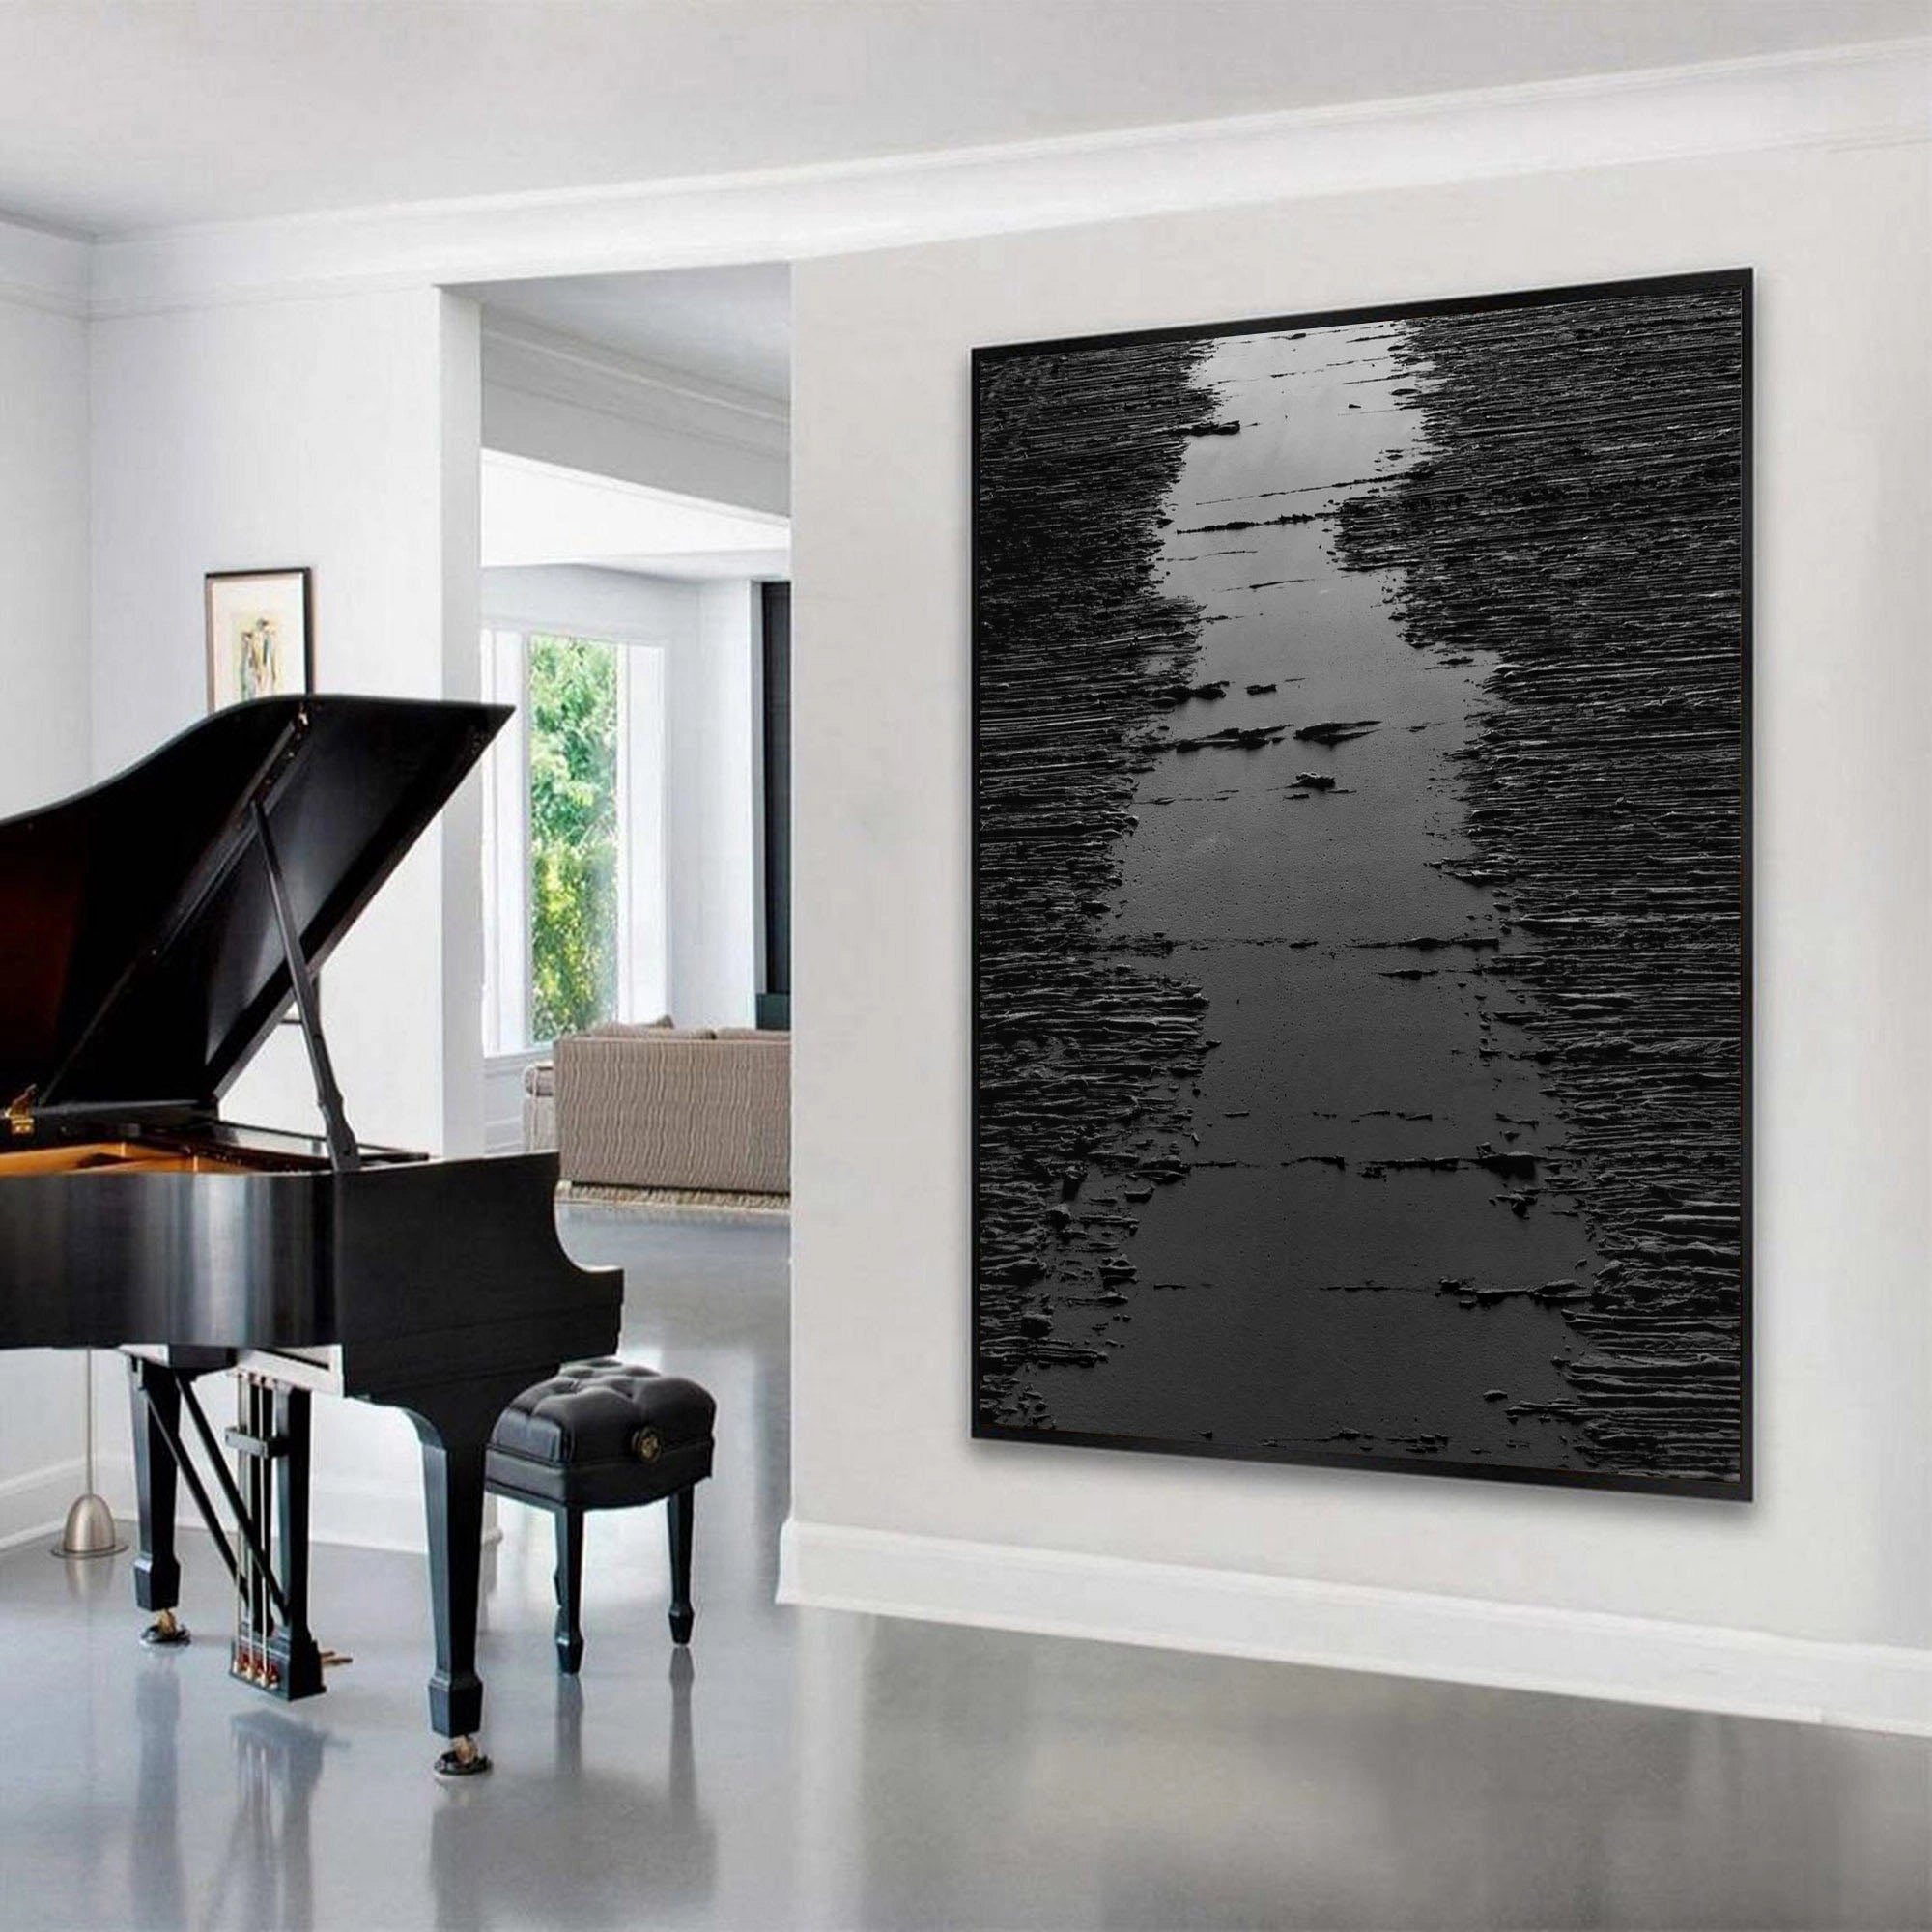 Black 3D Textured Minimalist River Canvas Wall Artwork Decor for Room